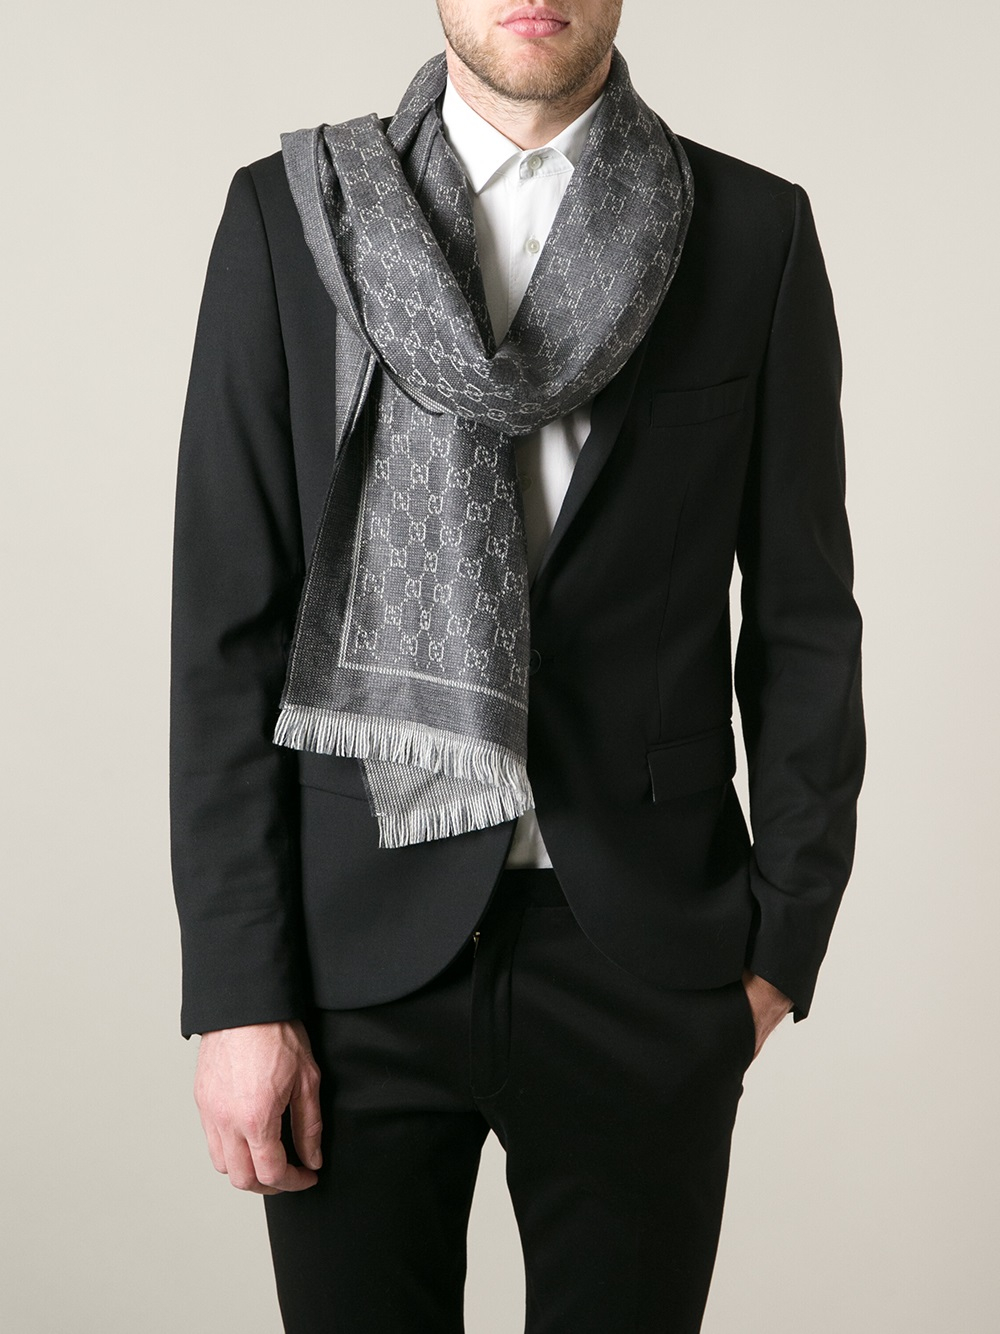 Gucci Wool Monogram Scarf in Dark Grey (Gray) for Men - Lyst